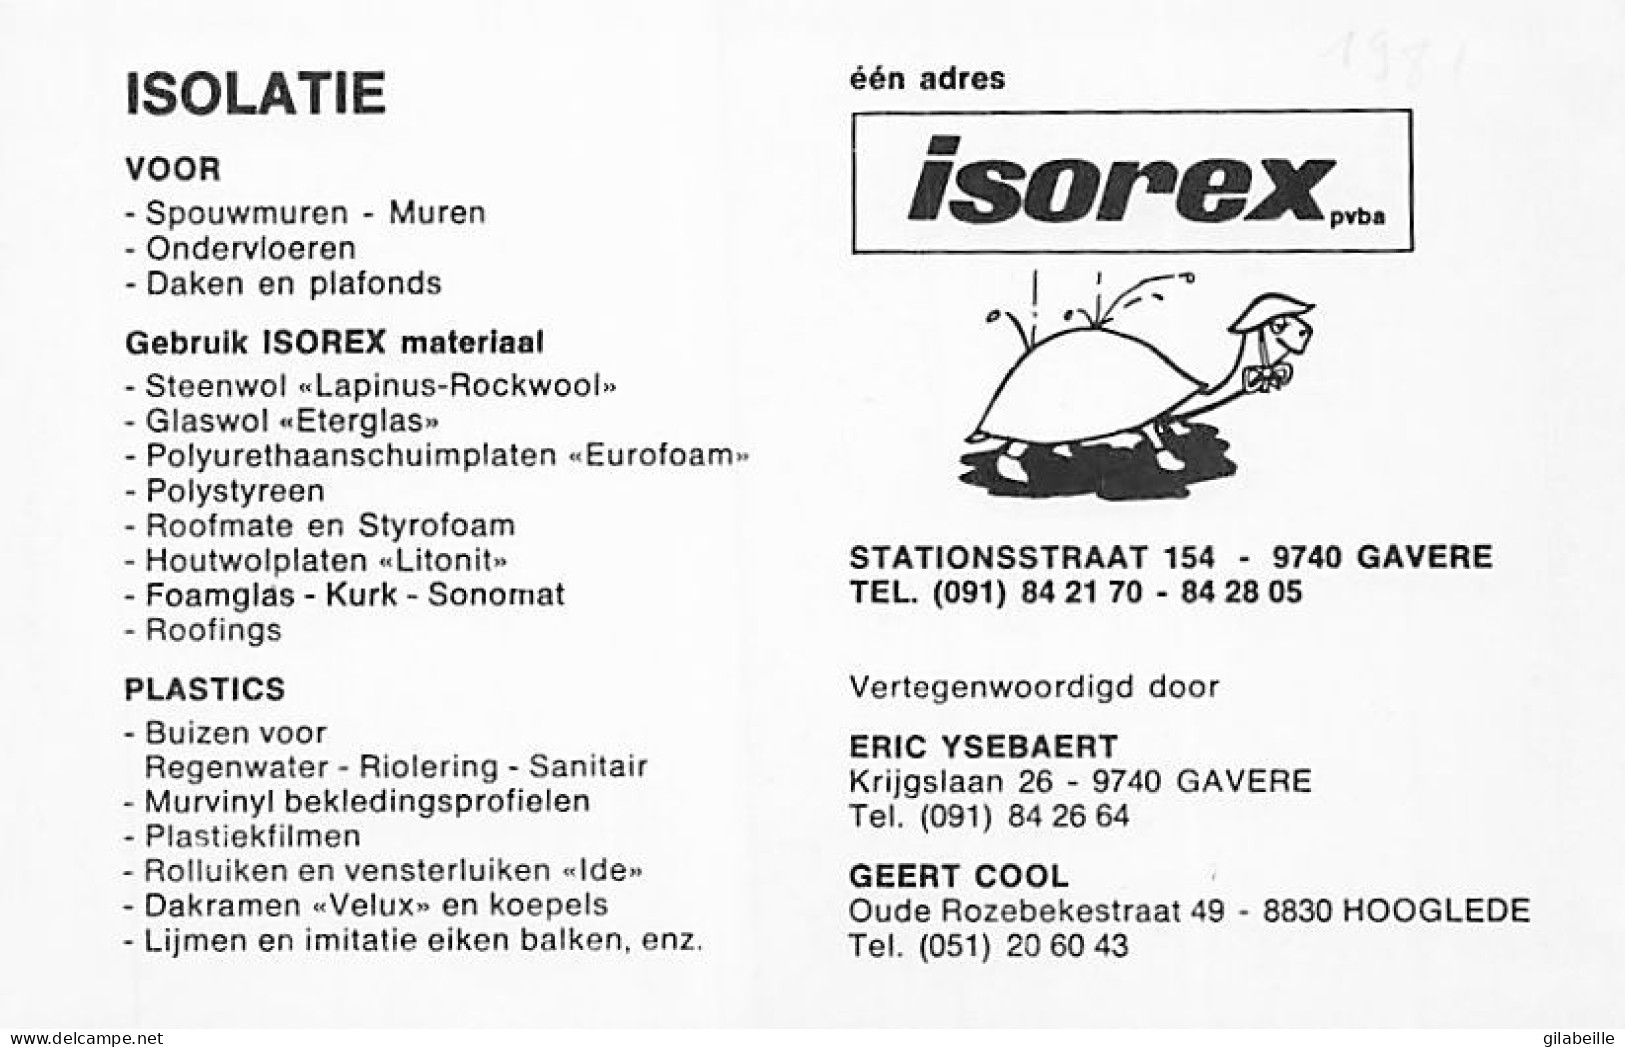 Velo - Cyclisme - Coureur Cycliste Belge Hugo Vergucht - Team Isorex - 1981  - Zonder Classificatie